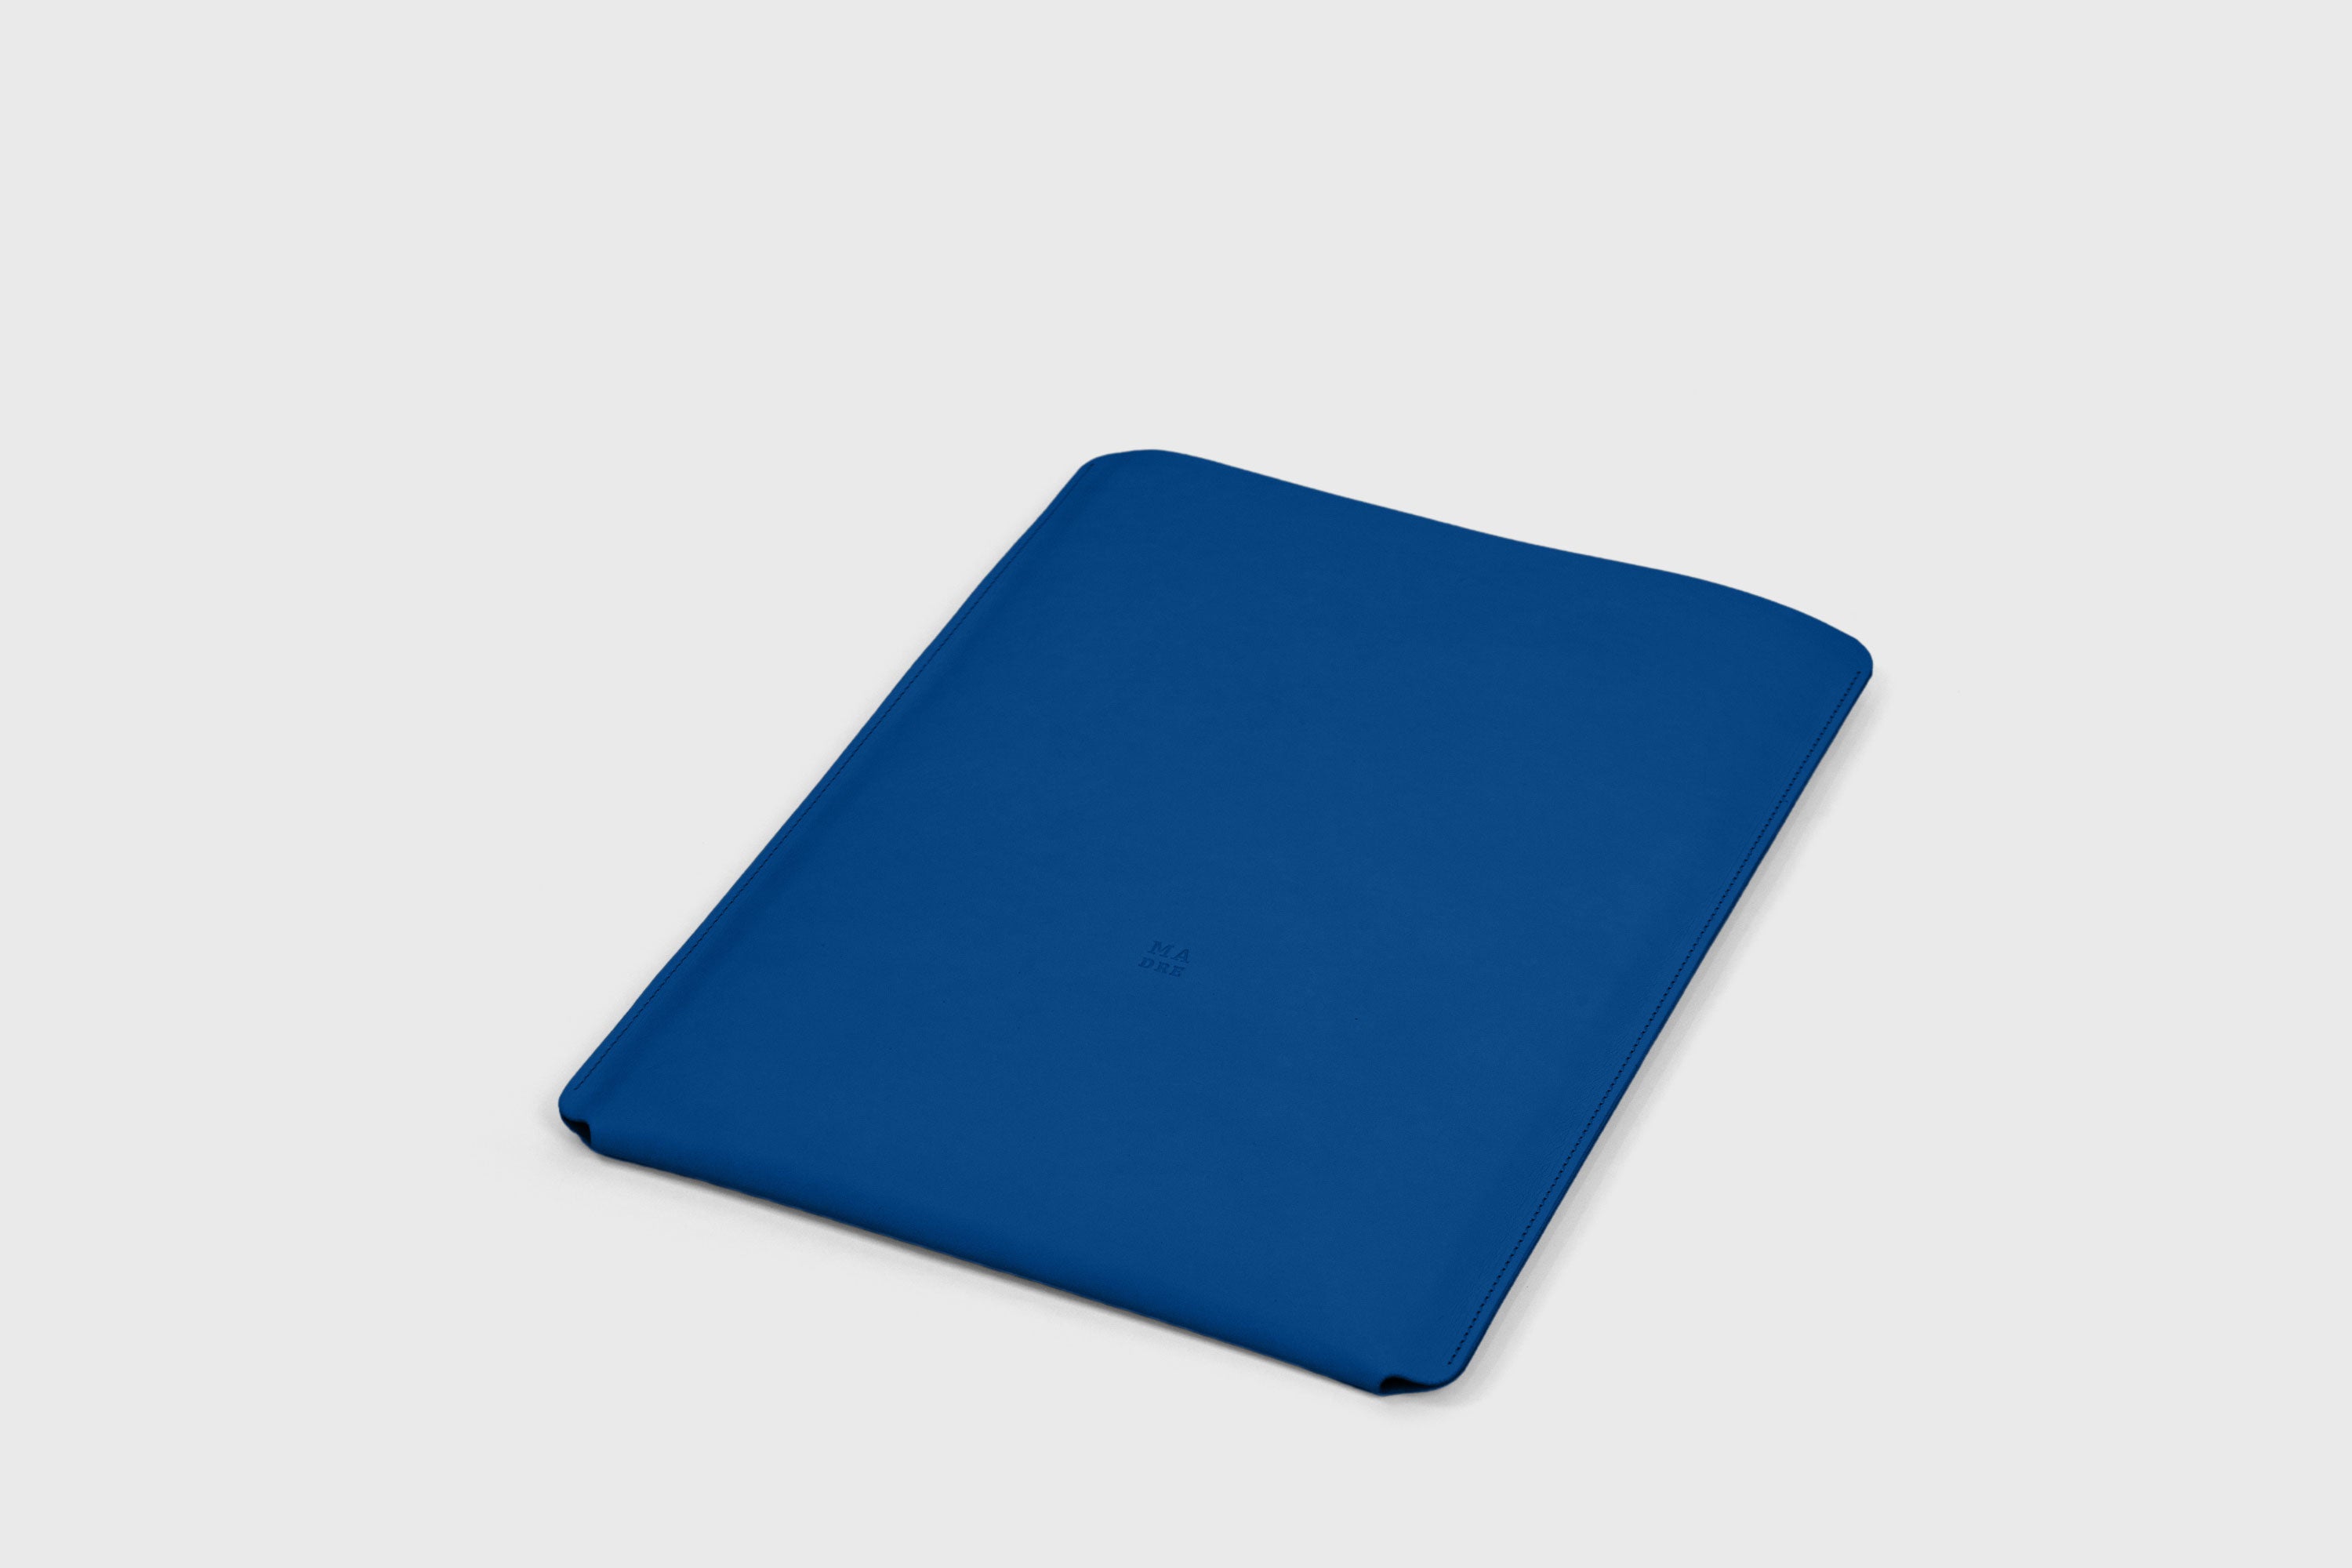 MacBook Pro 14 Inch Sleeve Leather Royal Blue Sleek Design Vegetable Tanned Leather Design Manuel Dreesmann Atelier Madre Barcelona Spain